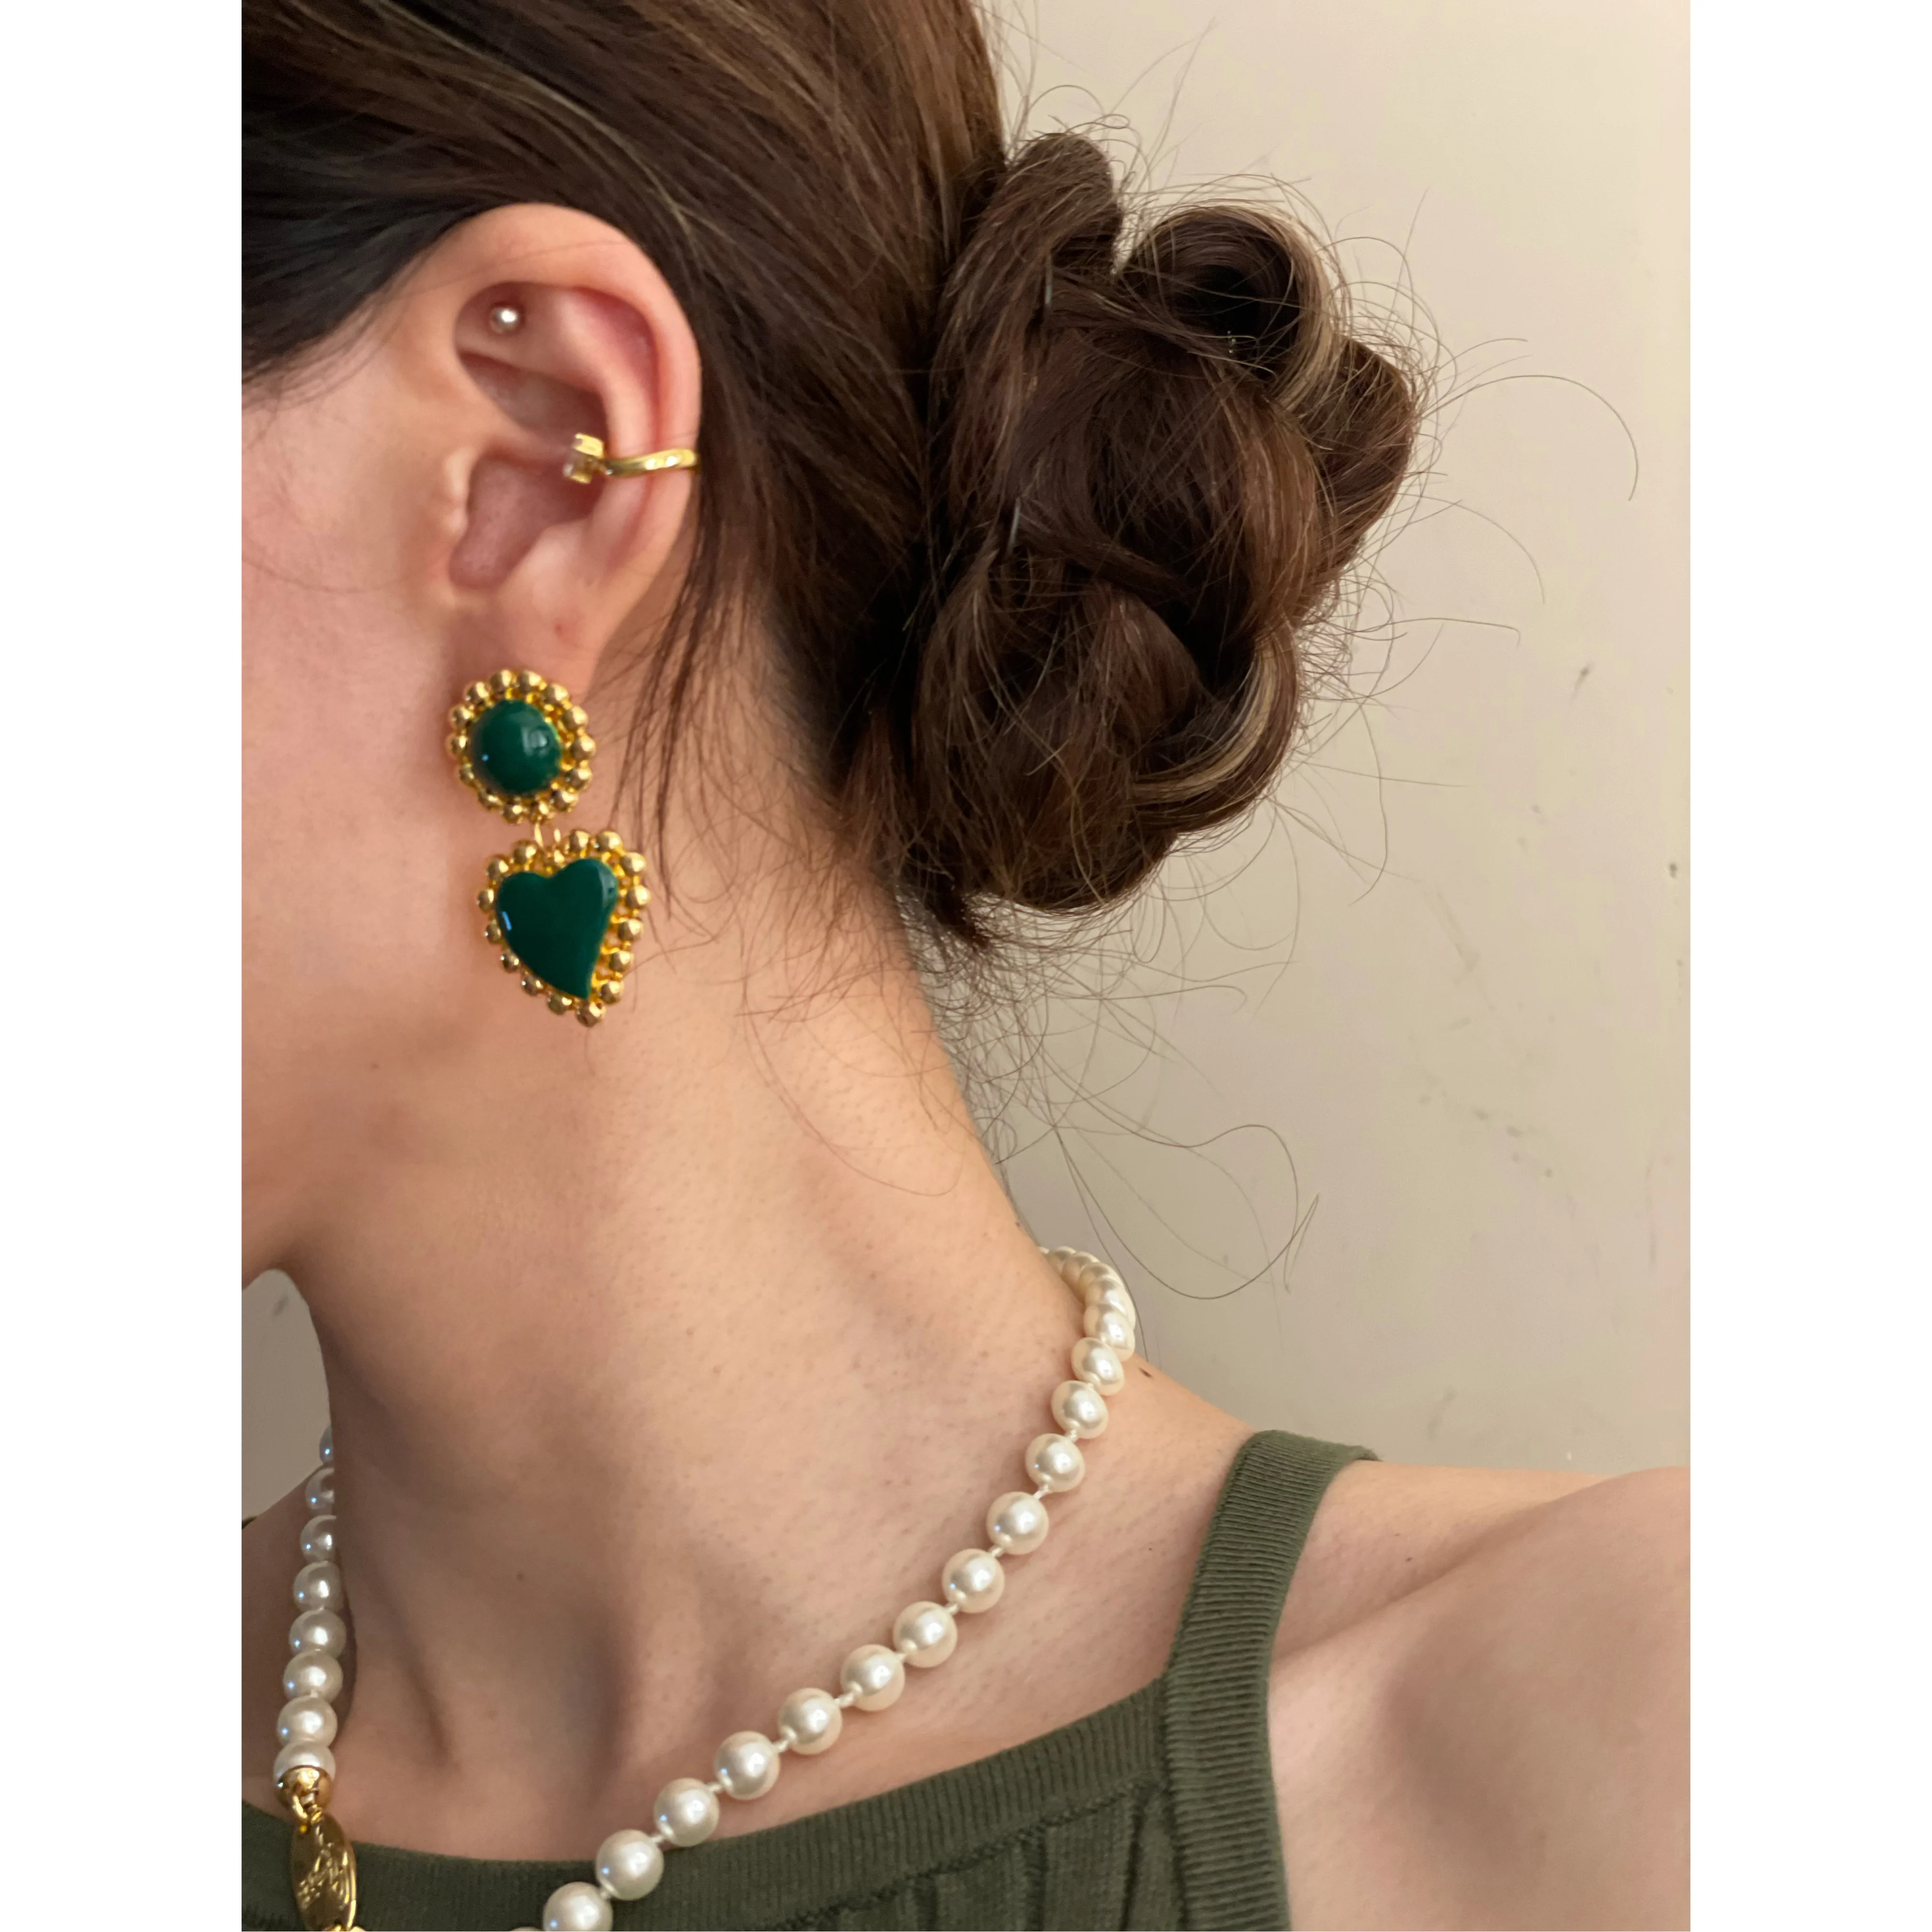 Long Designer Partywear Earrings - Green Color Earrings for Gown and  Lehenga - Kesha Luxury Long Earrings by Blingvine